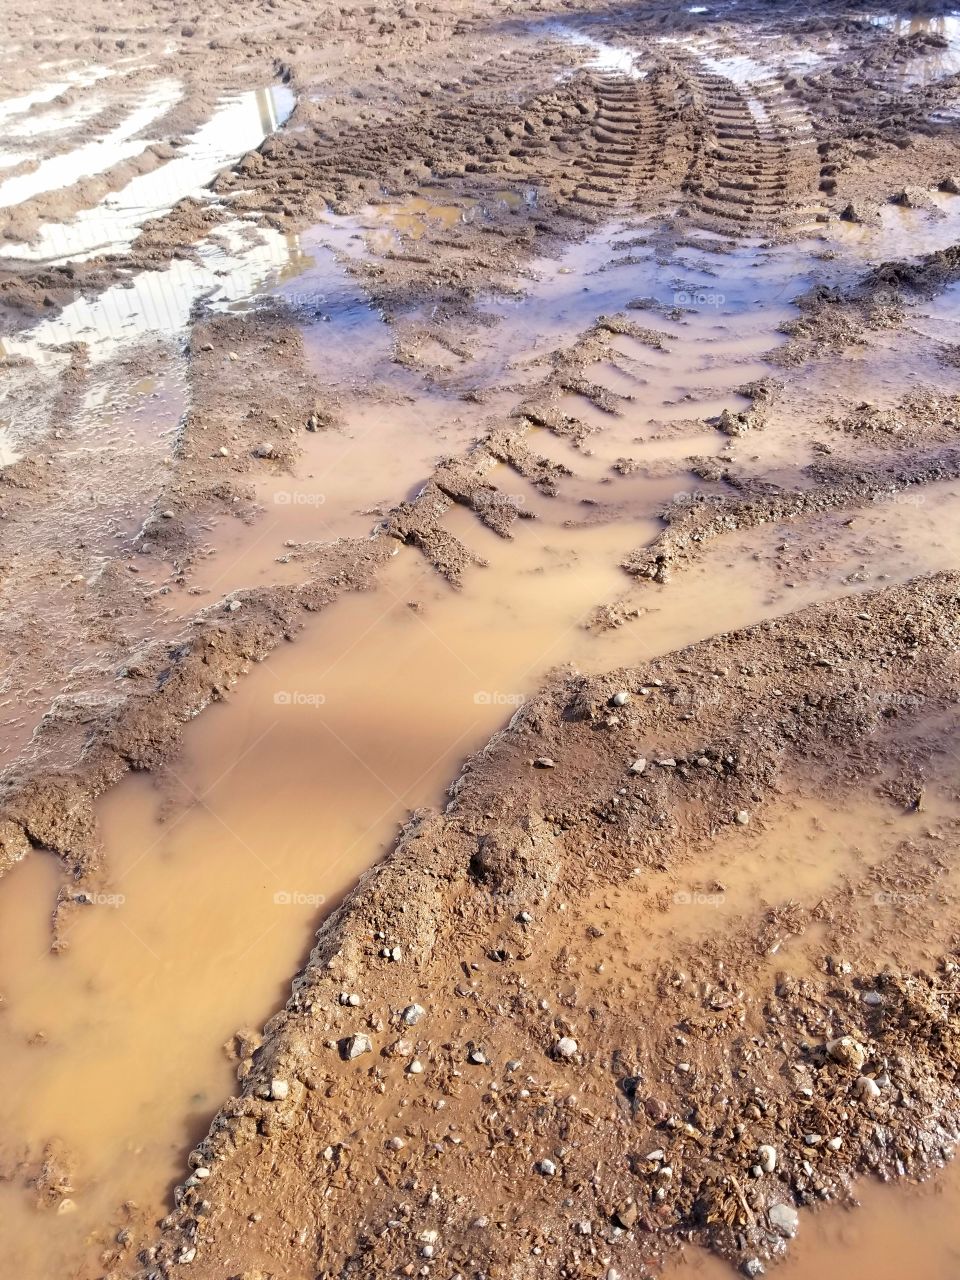 Tire tracks in mud.